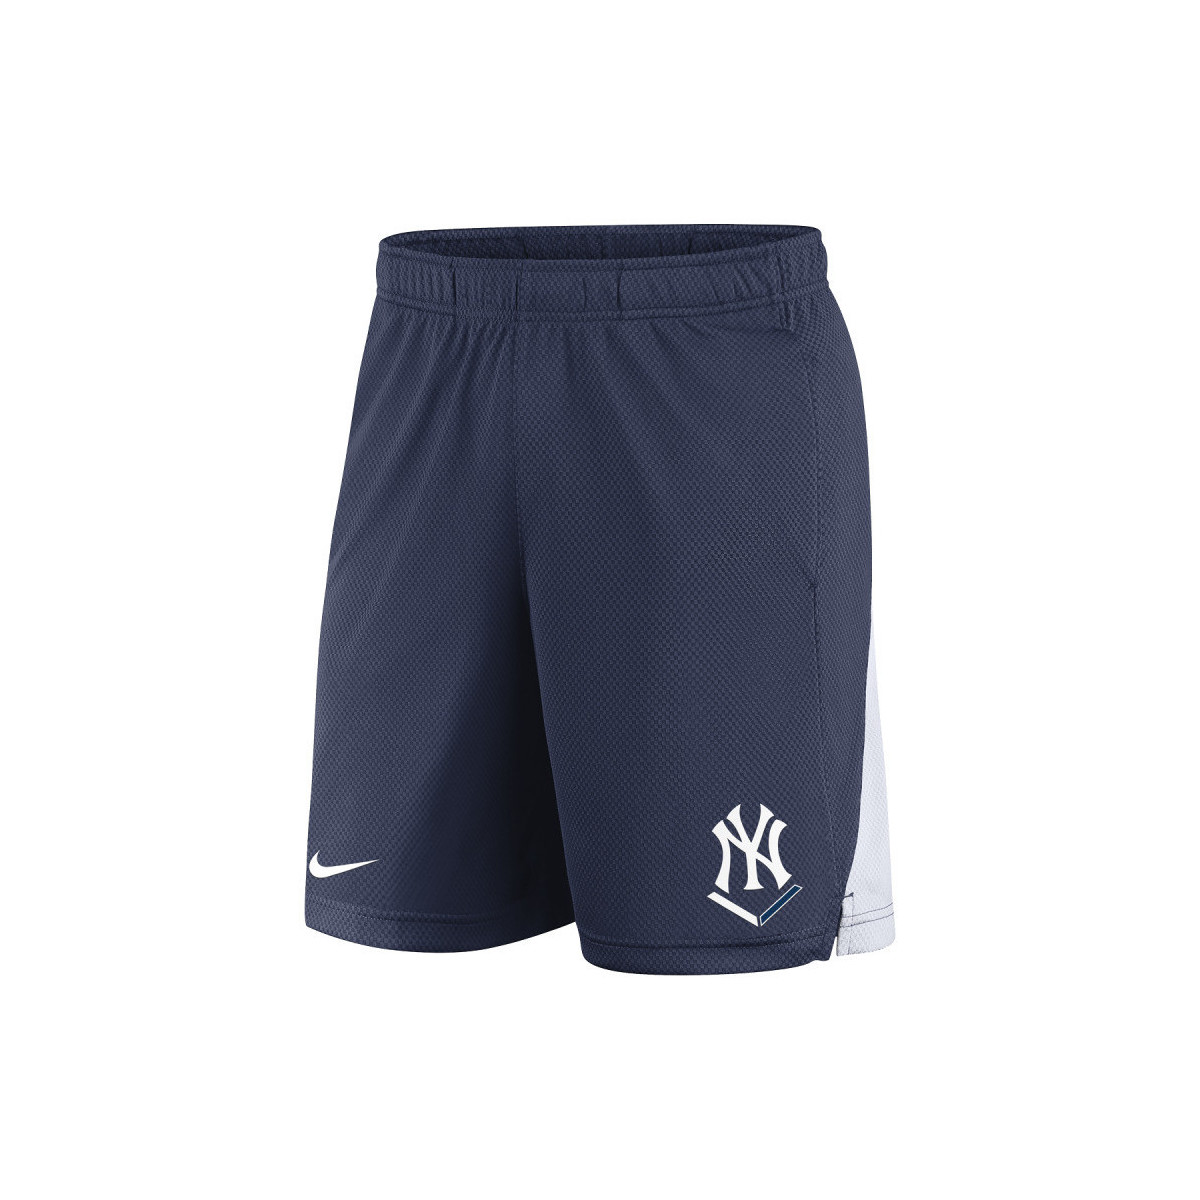 Vêtements Shorts / Bermudas Nike Short MLB New York Yankees Nik Multicolore